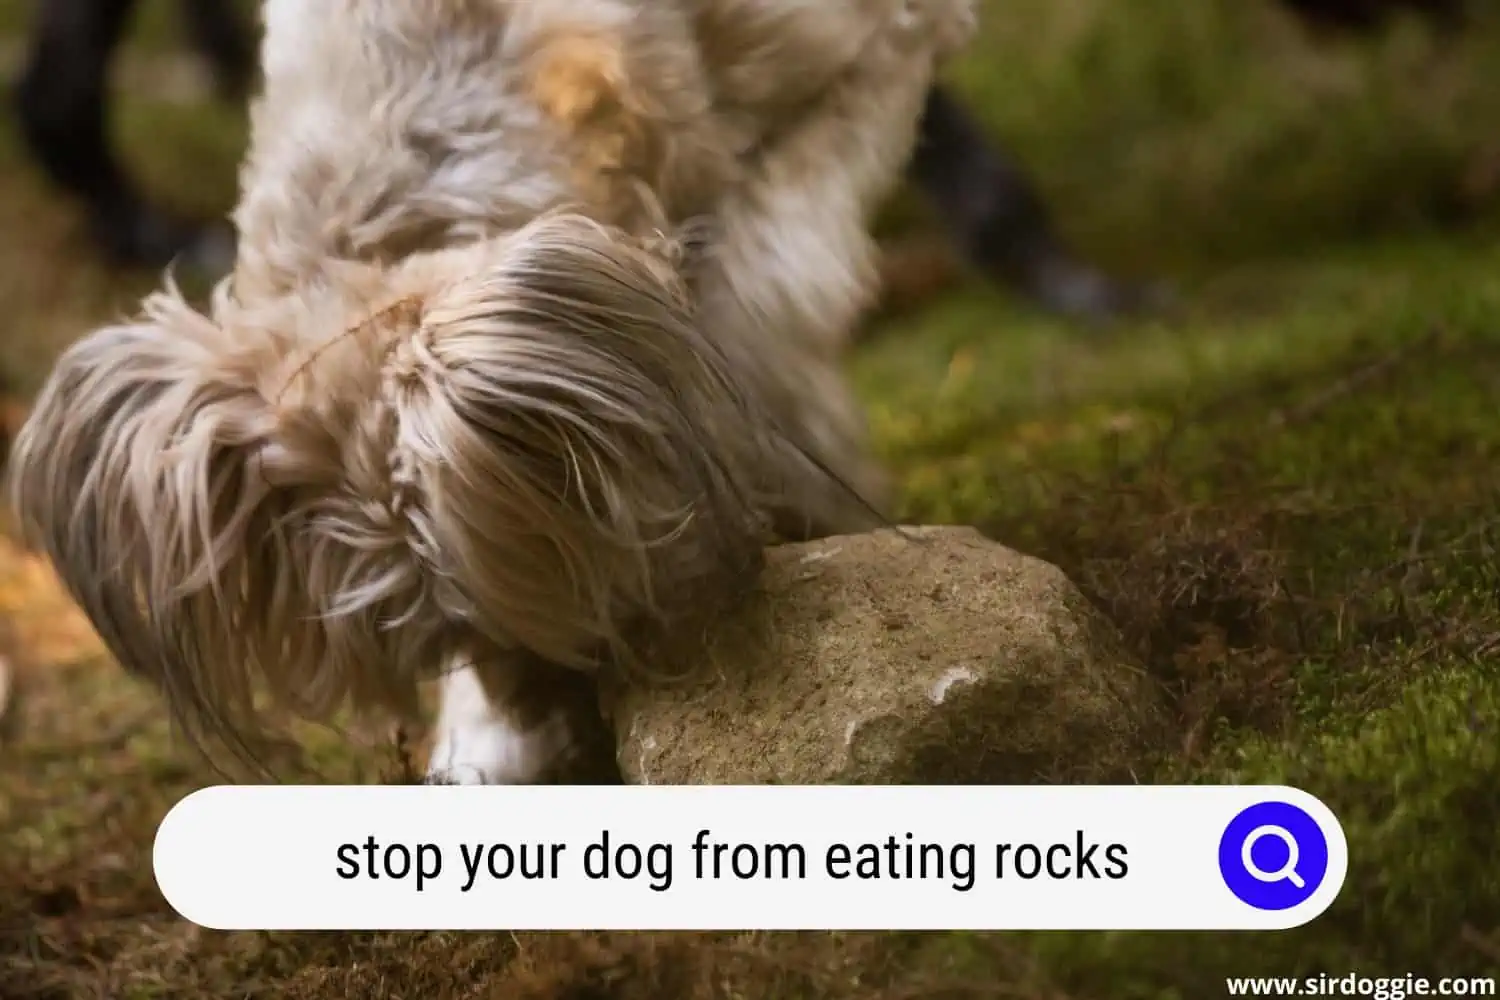 A dog eating rocks